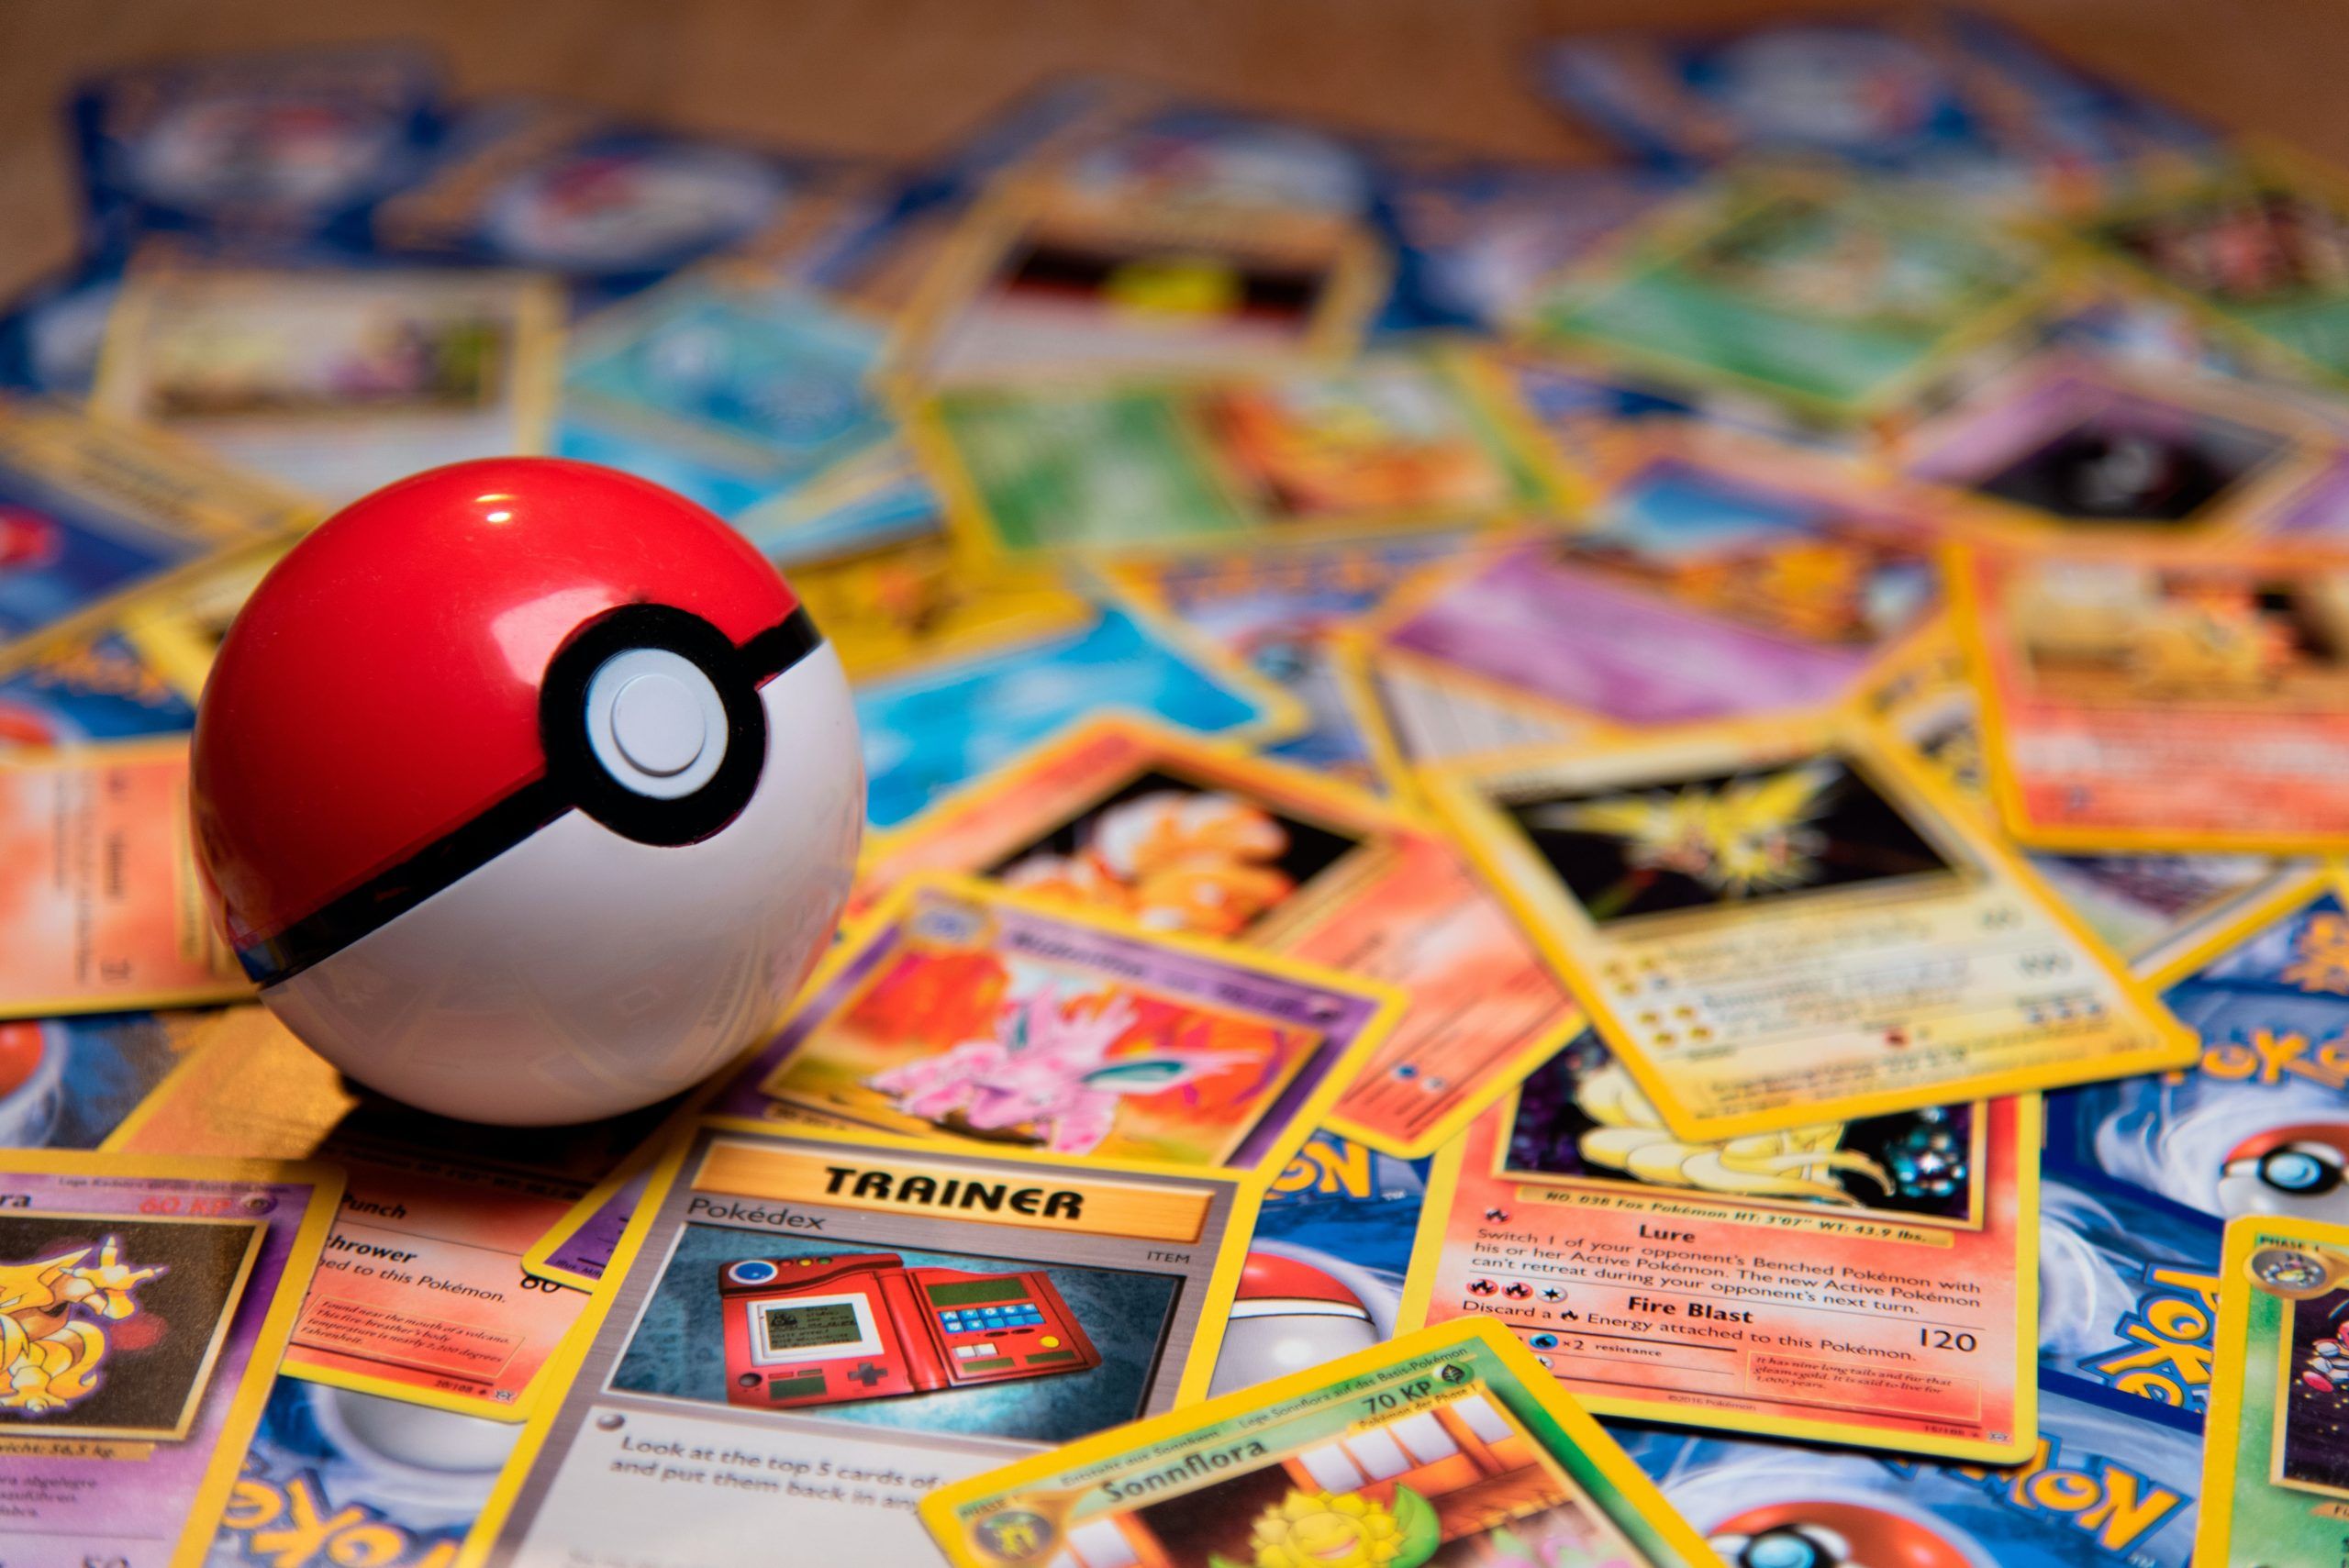 The $5 million Pokémon card: Inside Logan Paul's record-breaking